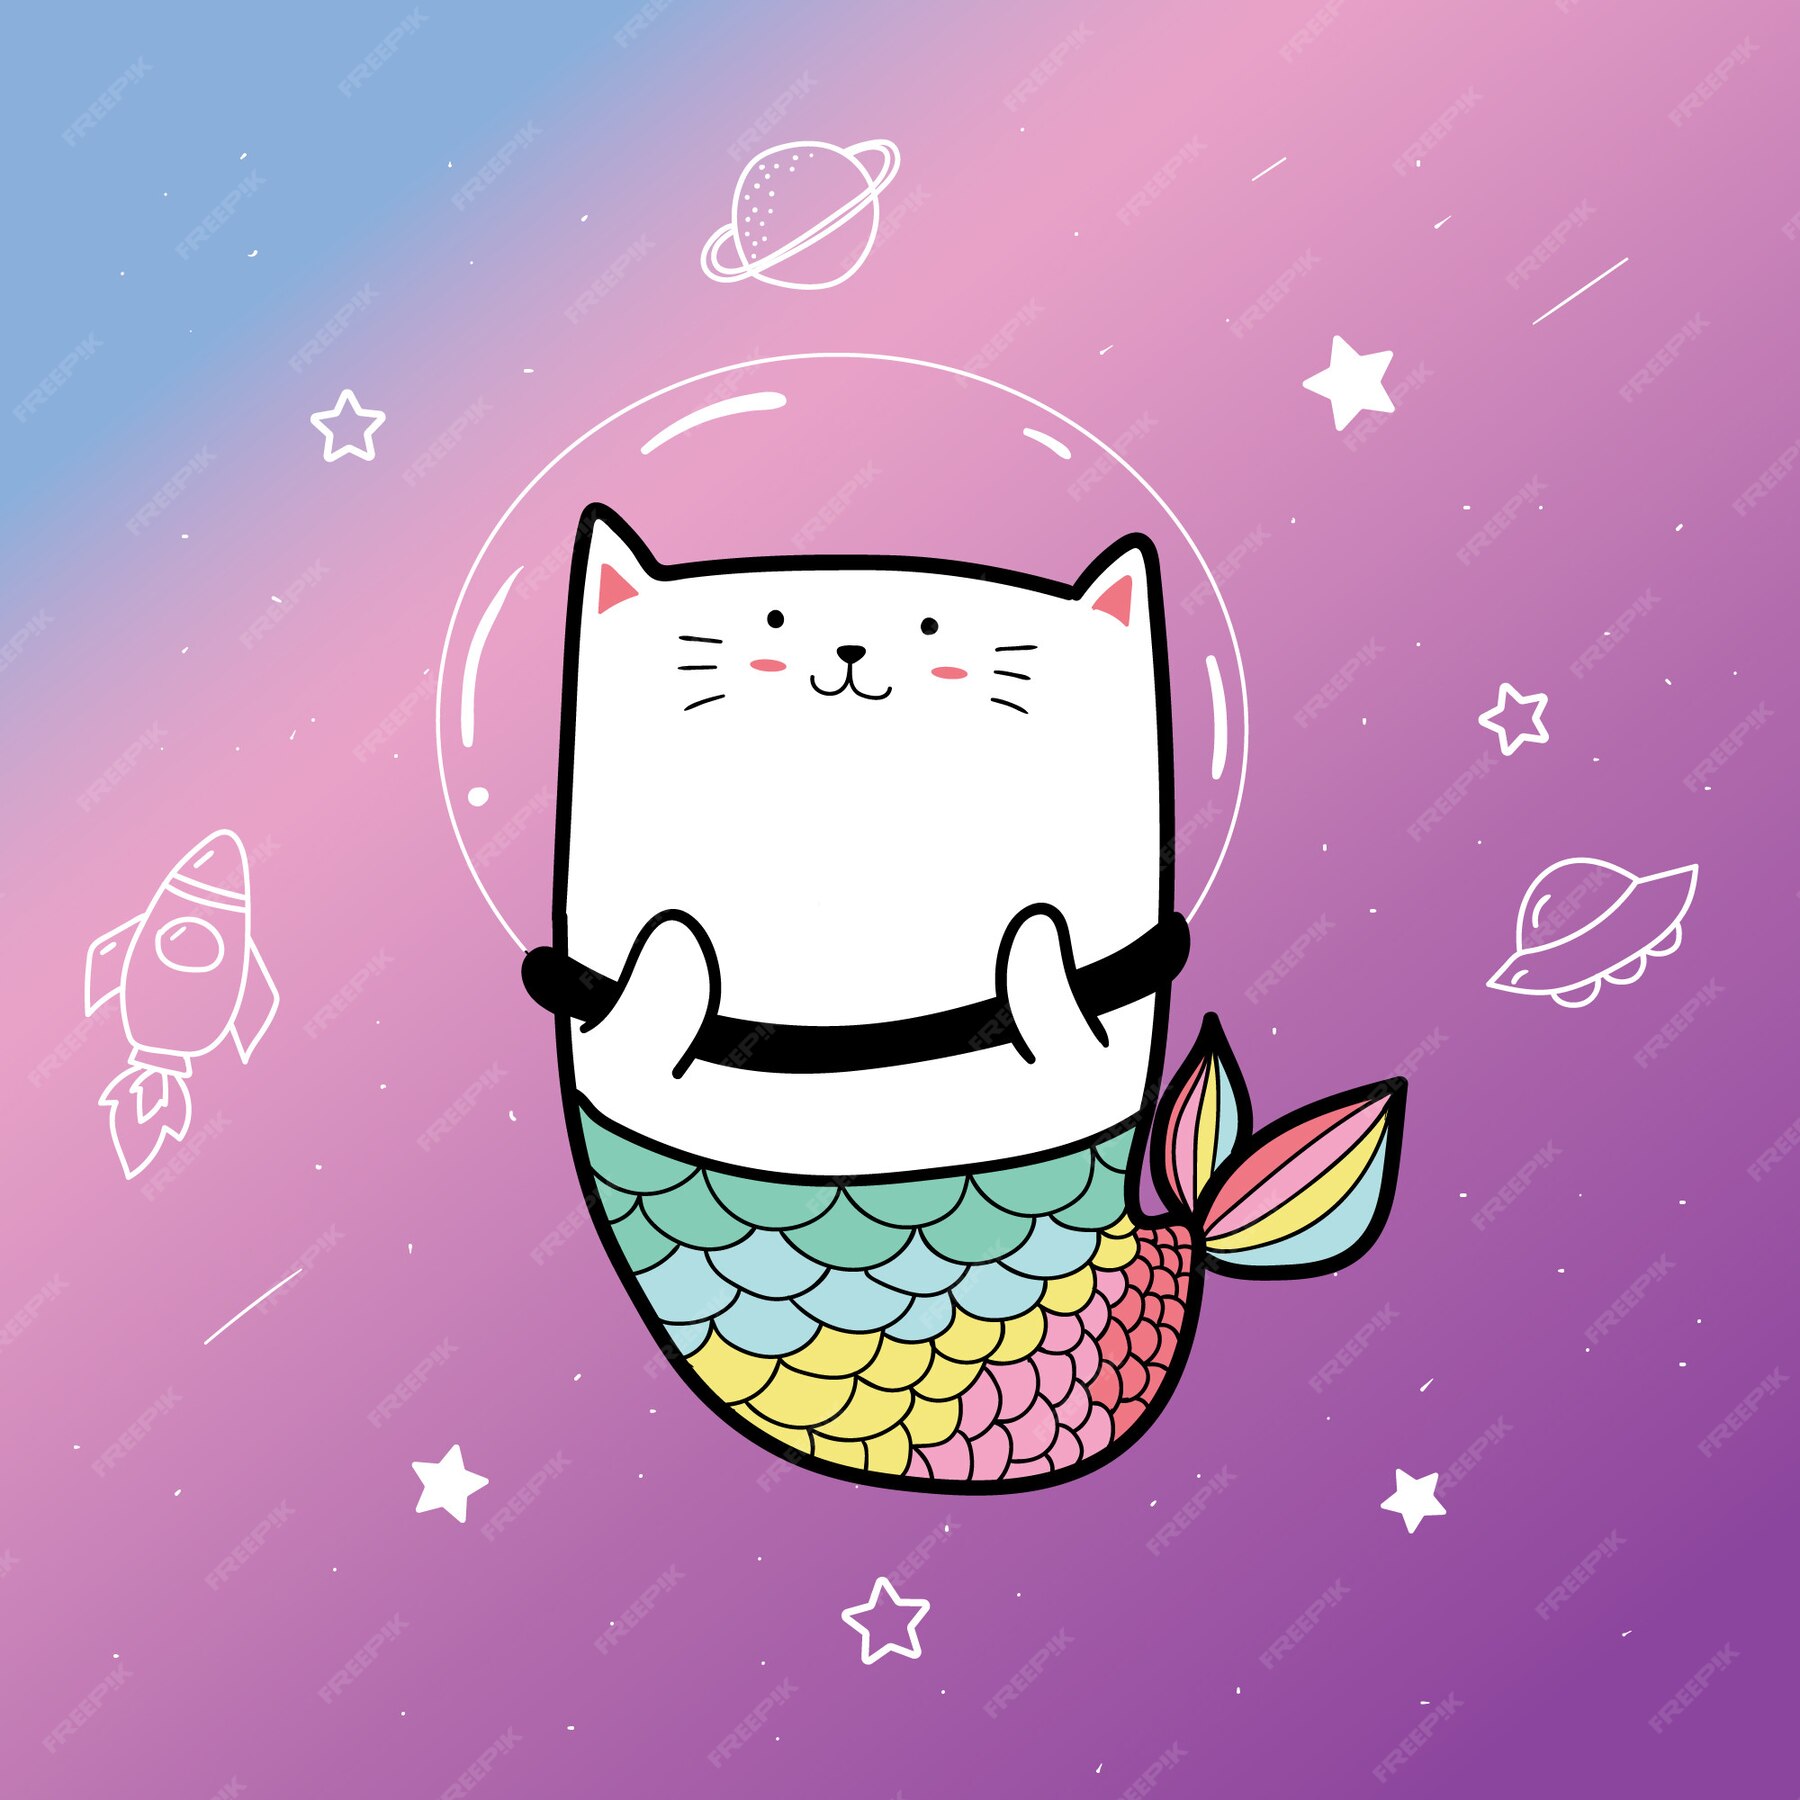 Premium Vector | Cute cat mermaid and space background